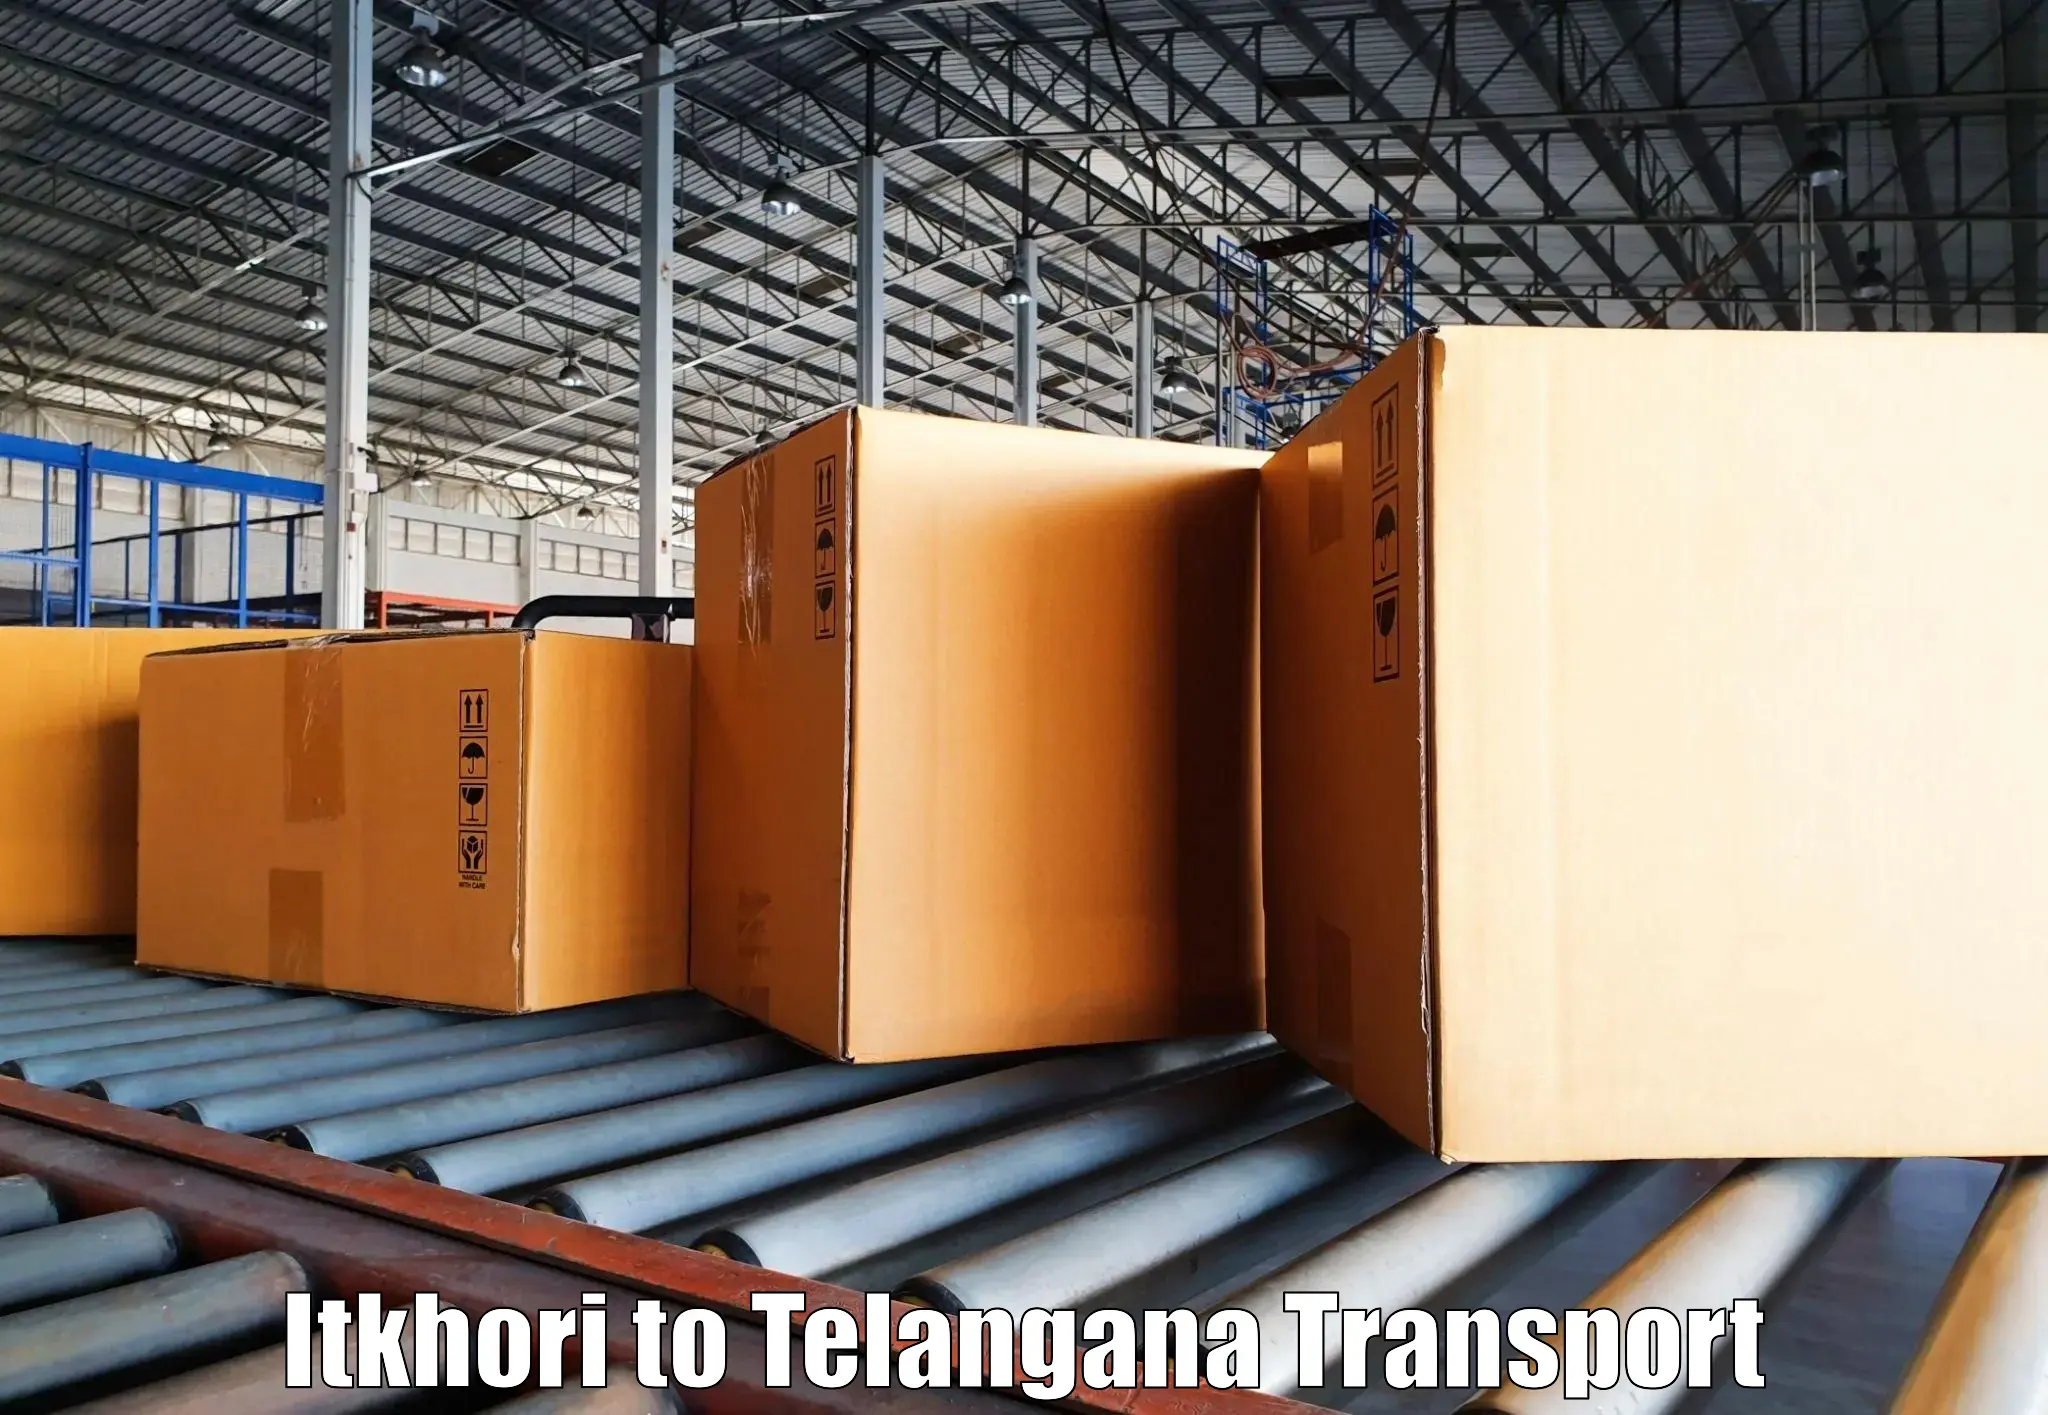 Transport shared services Itkhori to Tallada